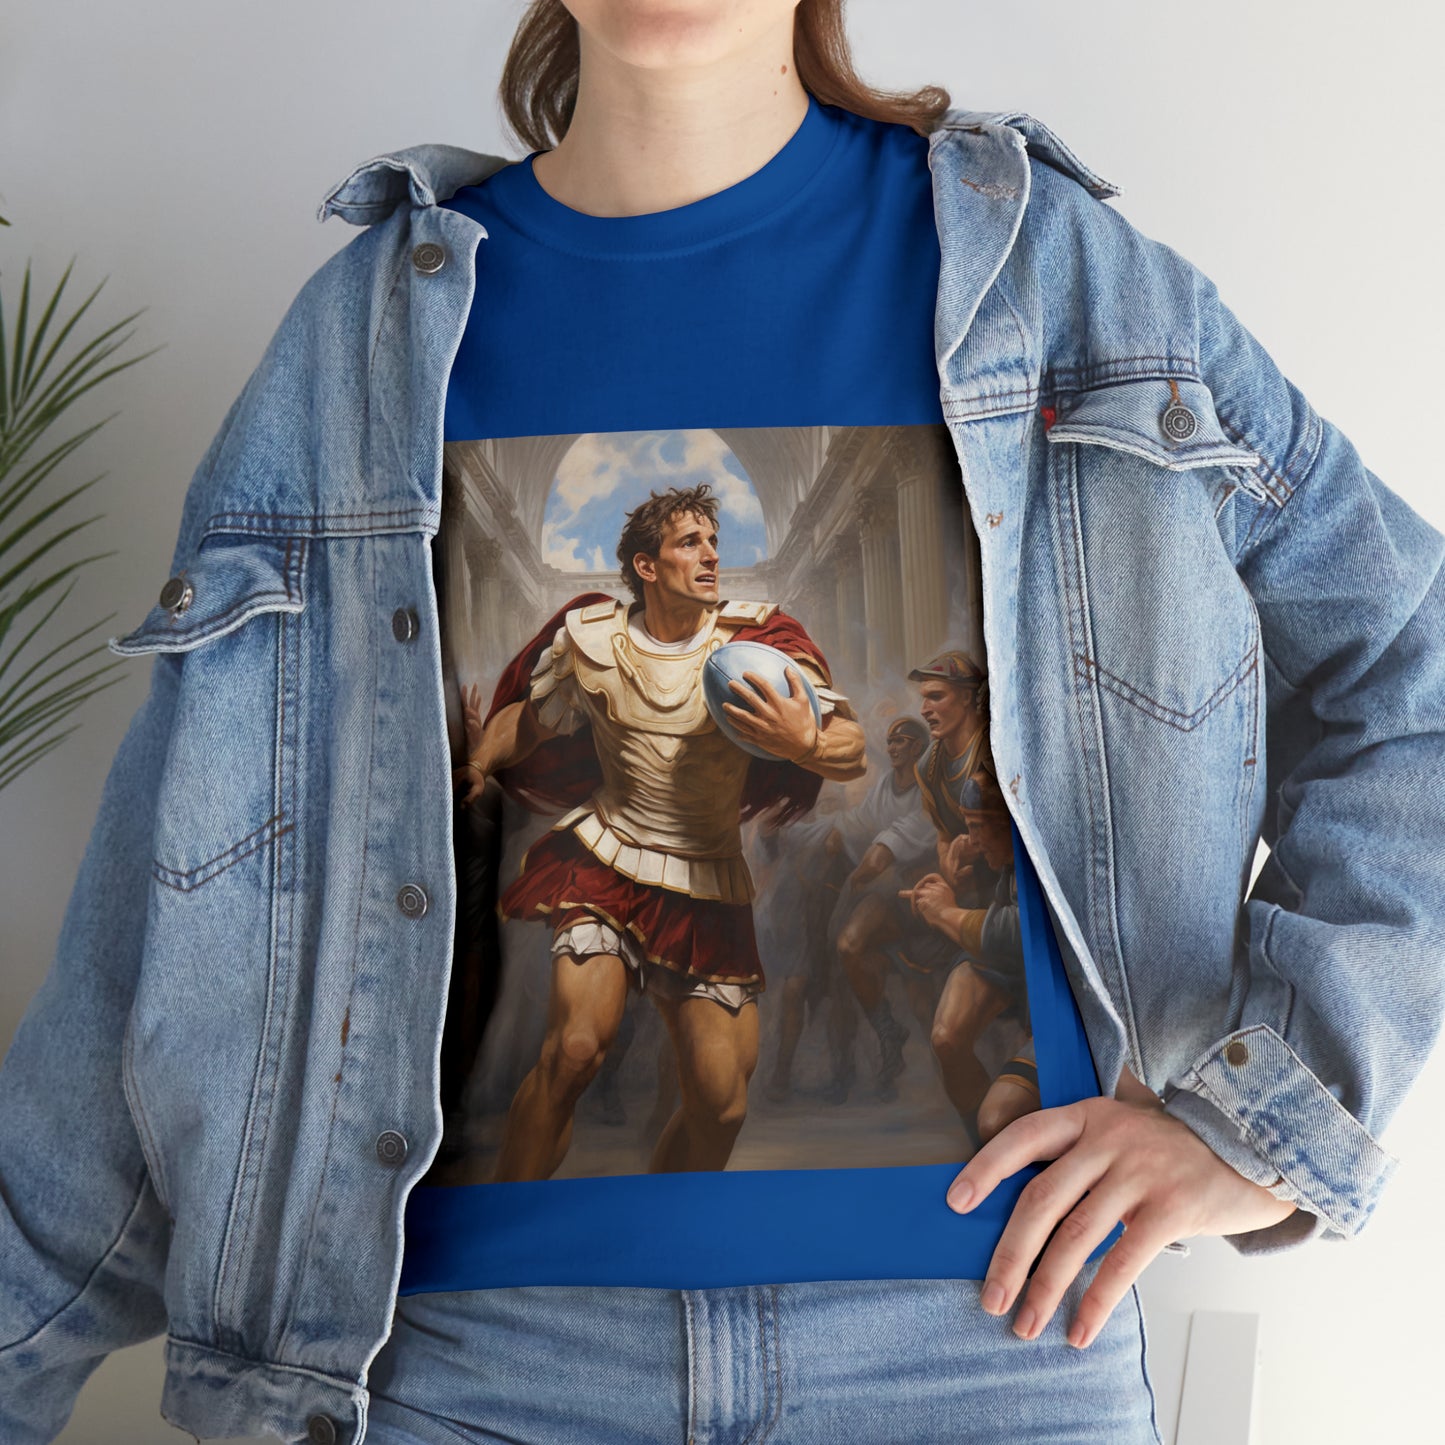 Caesar Rugby - dark shirts